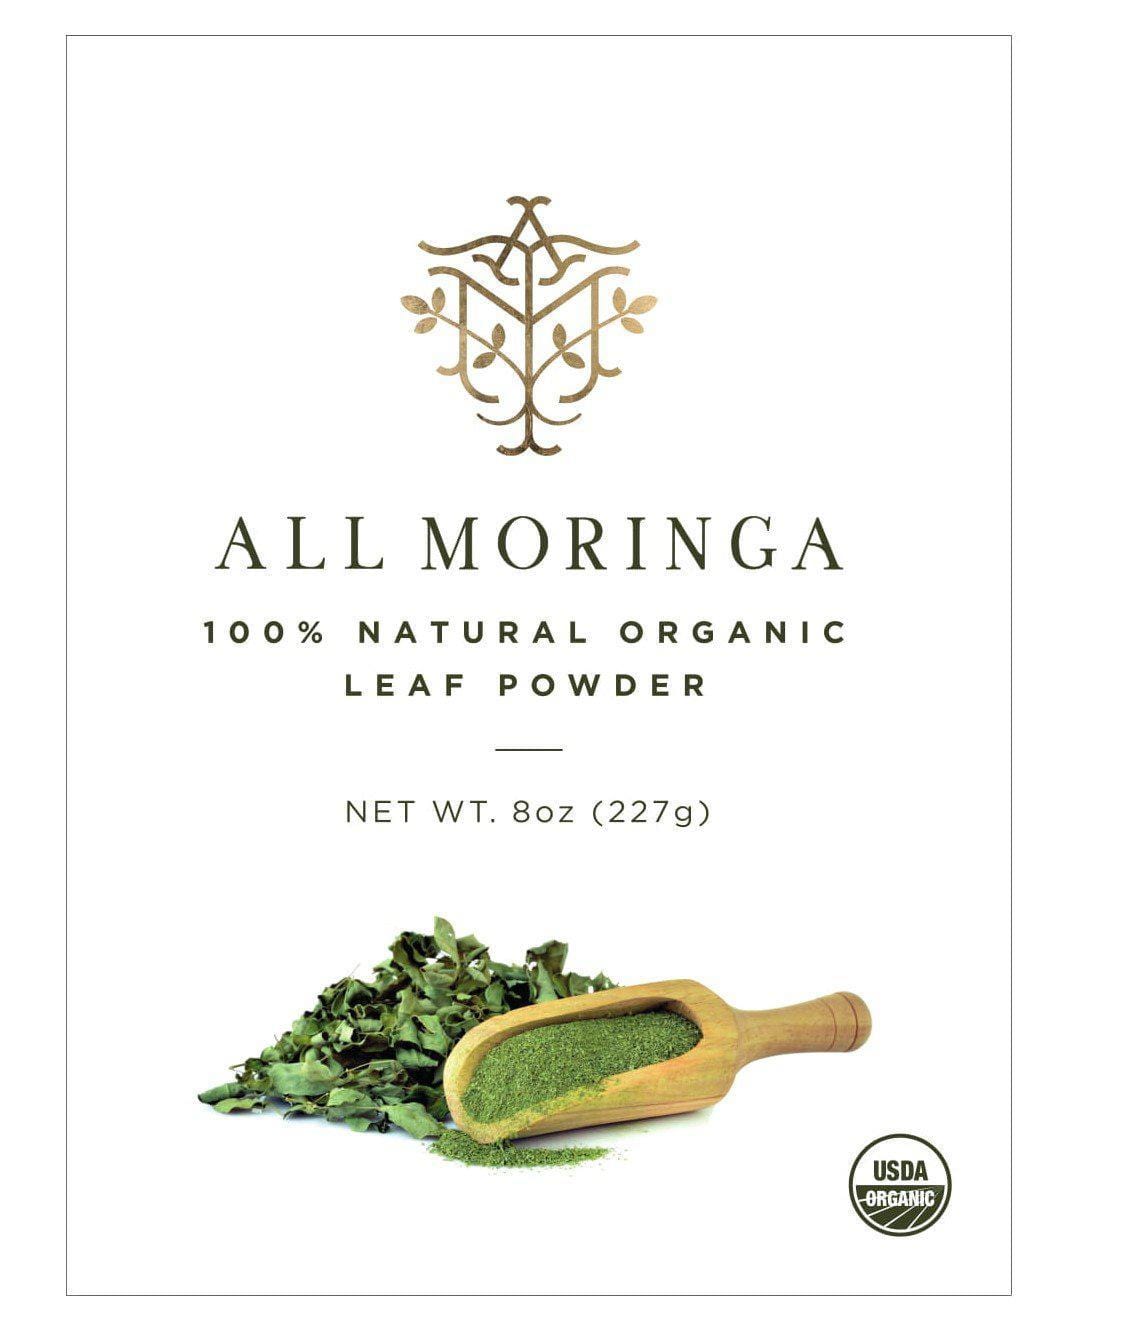 Organic moringa leaves powder label front logo and product name